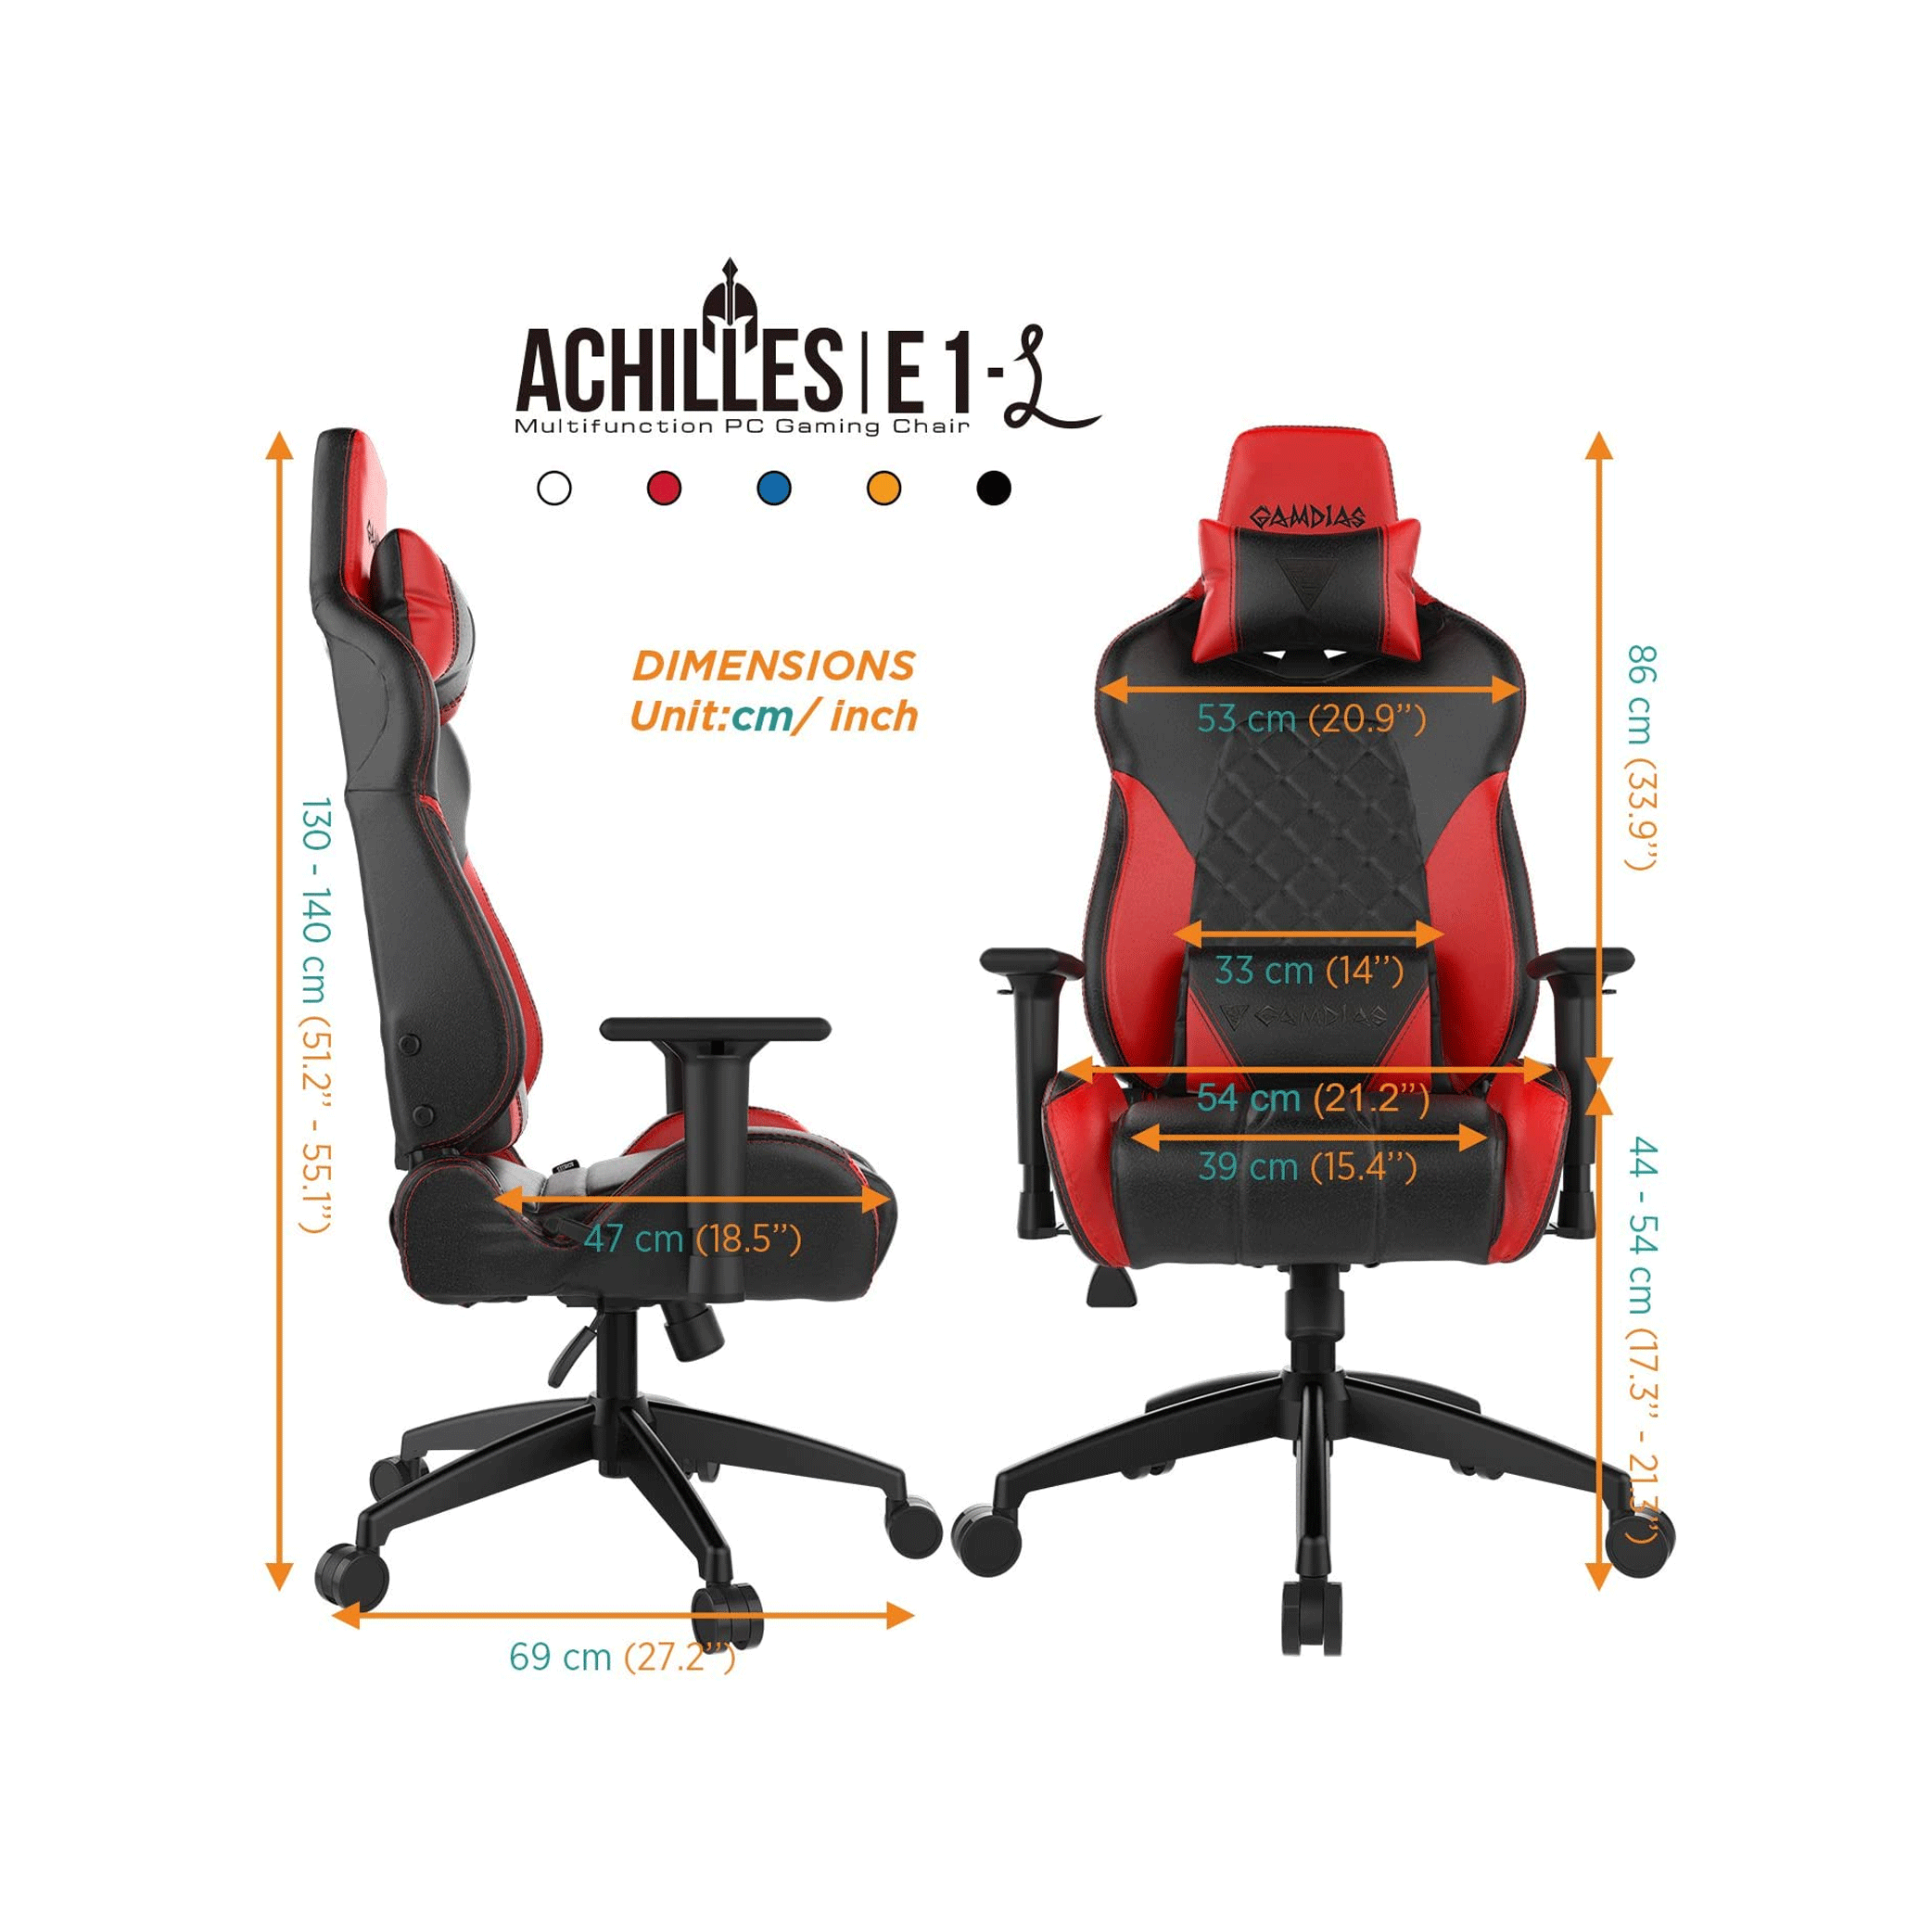 Gamdias Achilles E1-L RGB Multifunction PC Gaming Chair Black/Red